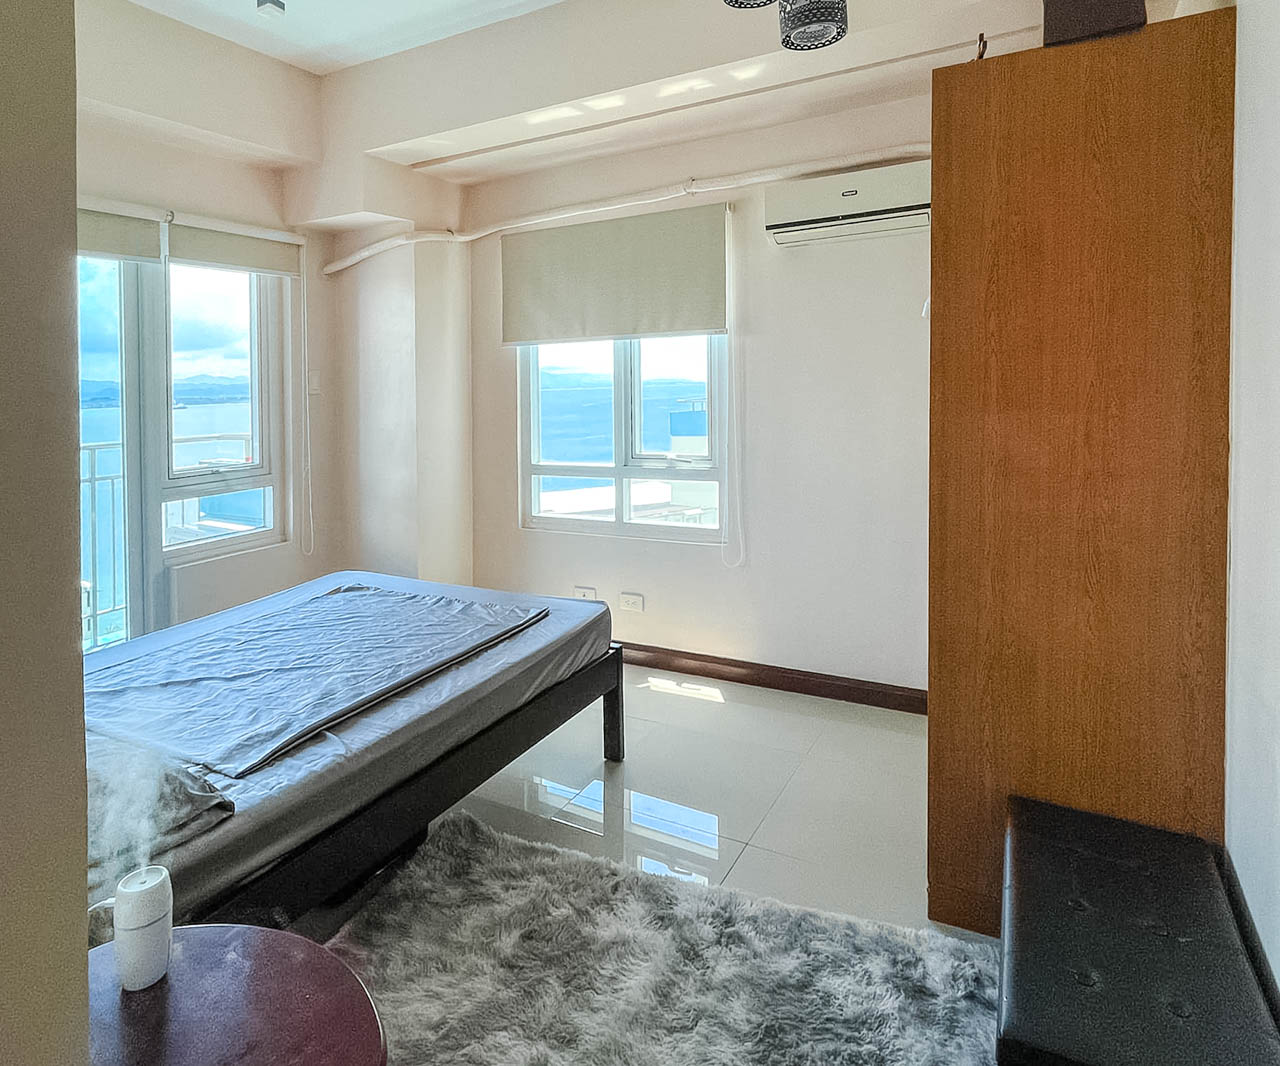 RCARM1 Furnished 2 Bedroom Condo for Rent in Mactan Lapu-Lapu - 9